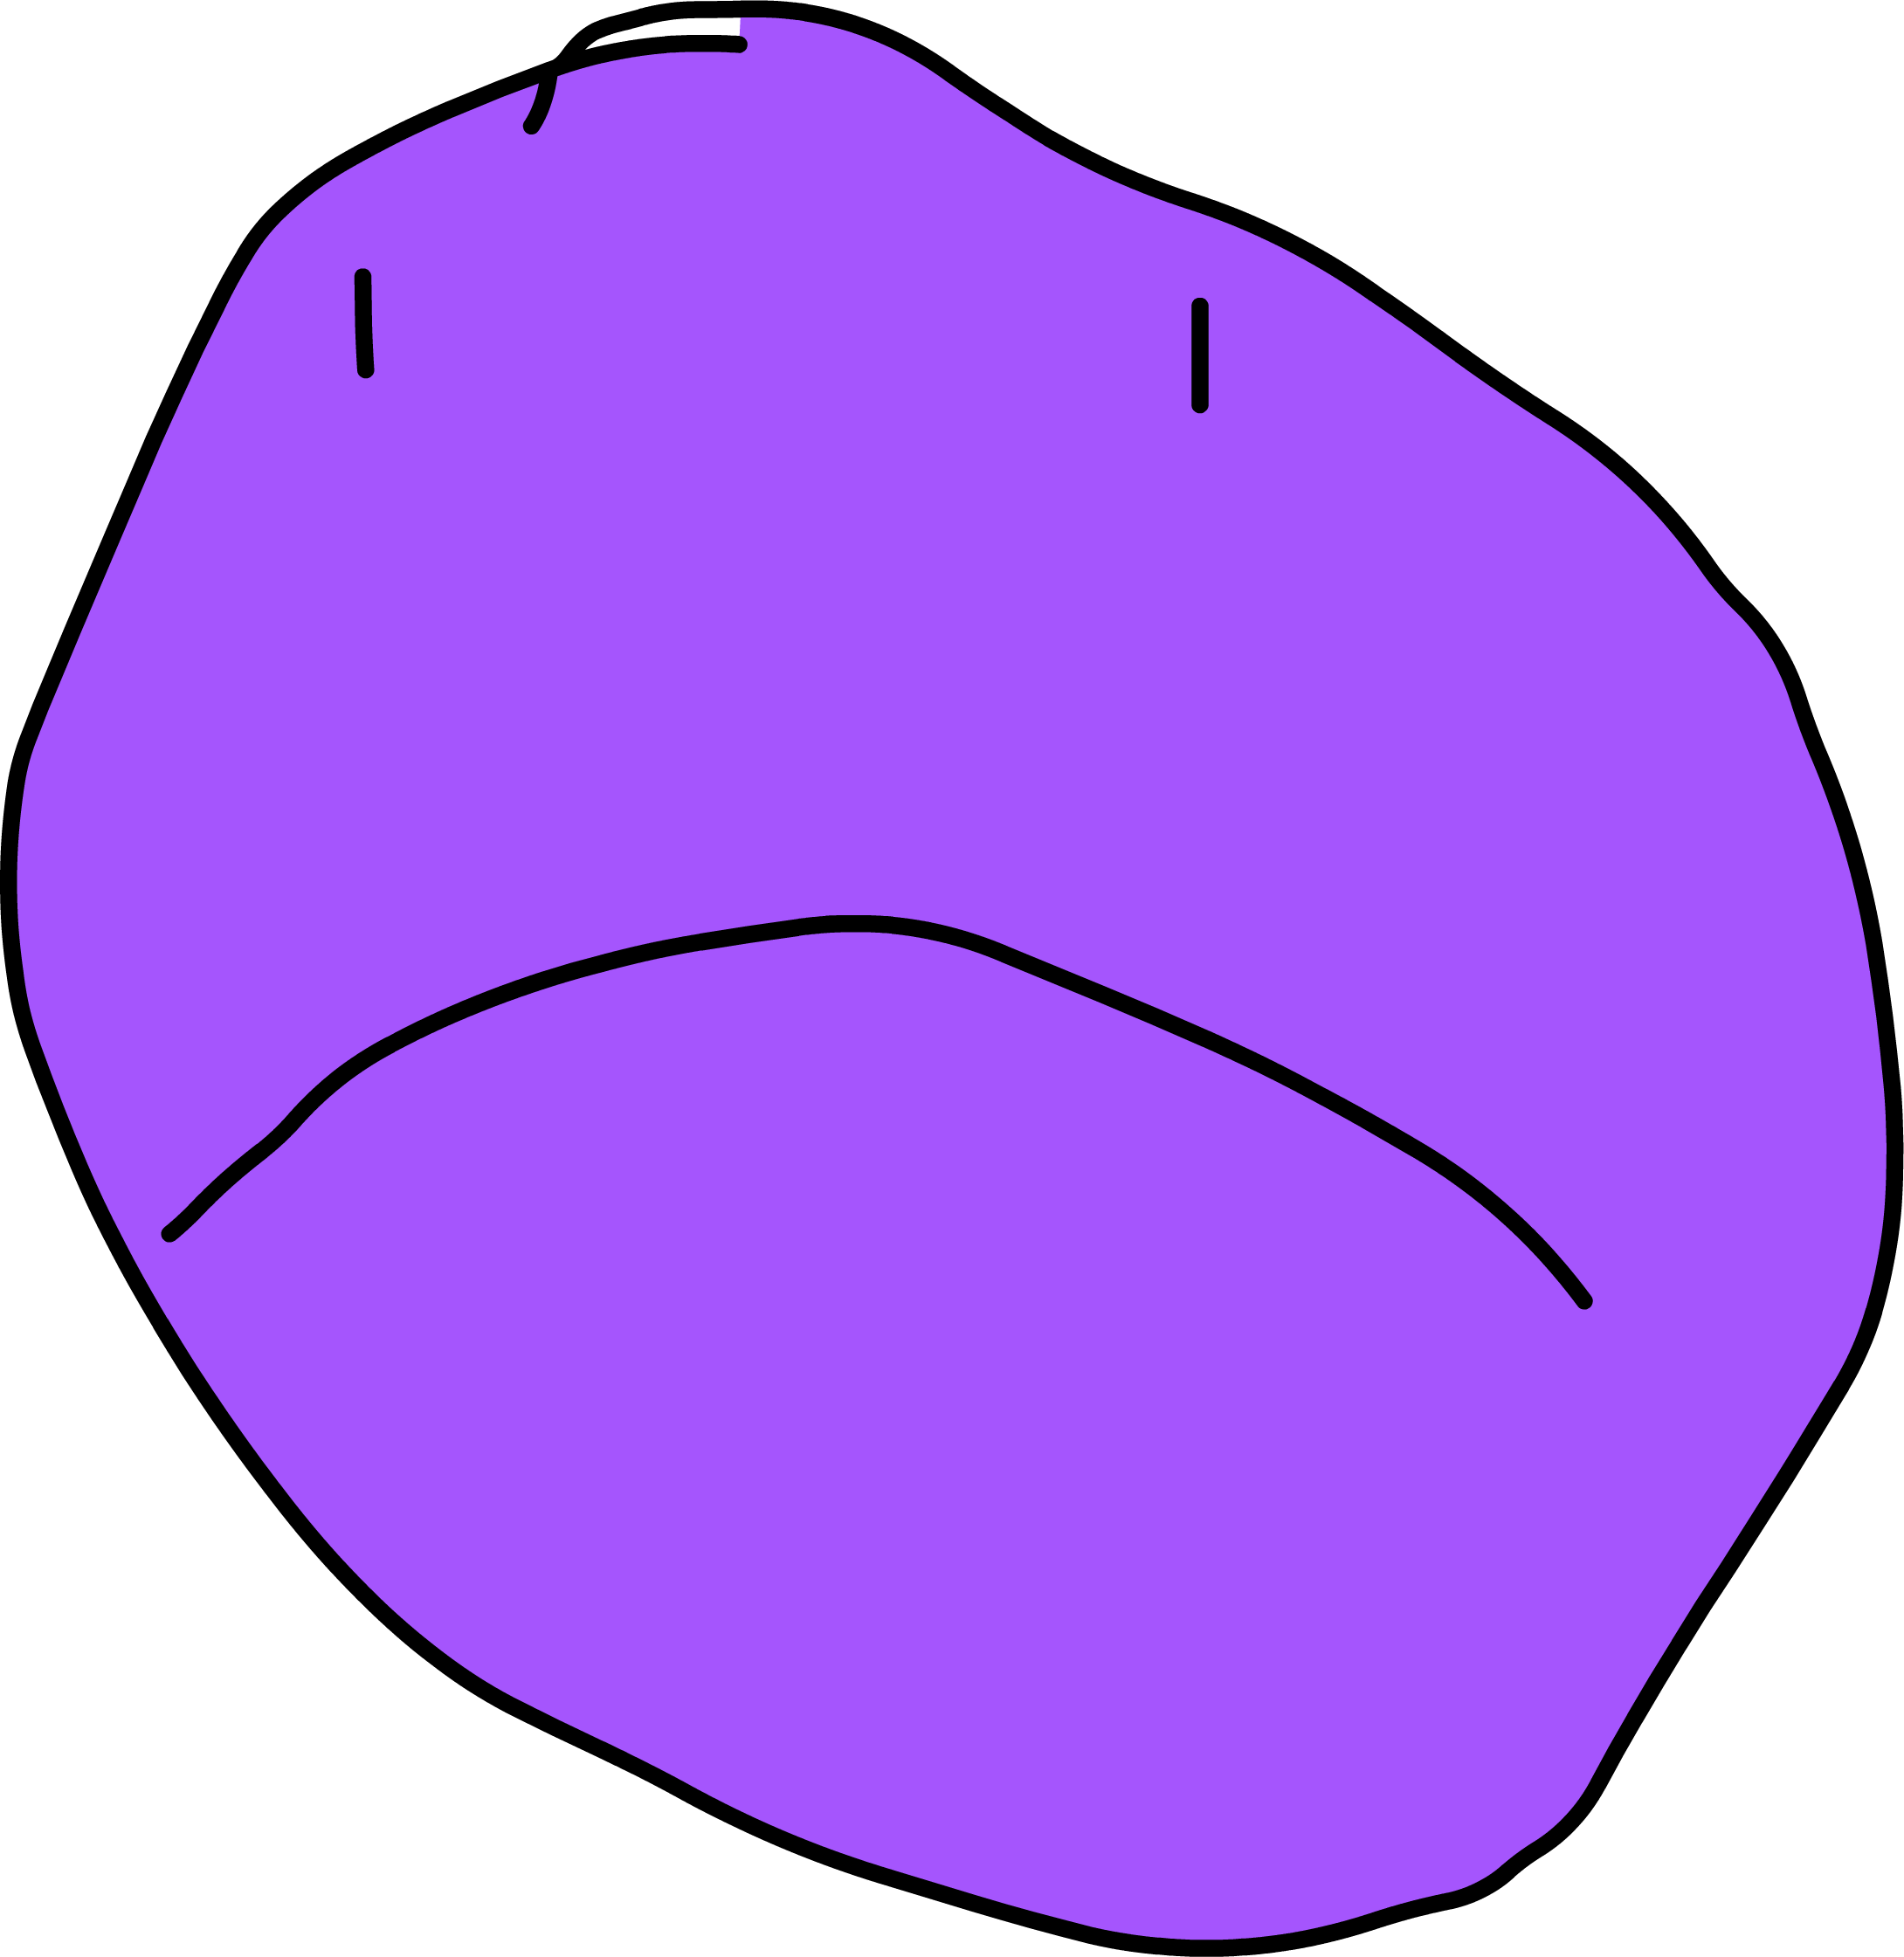 BfB sad face, Wiki